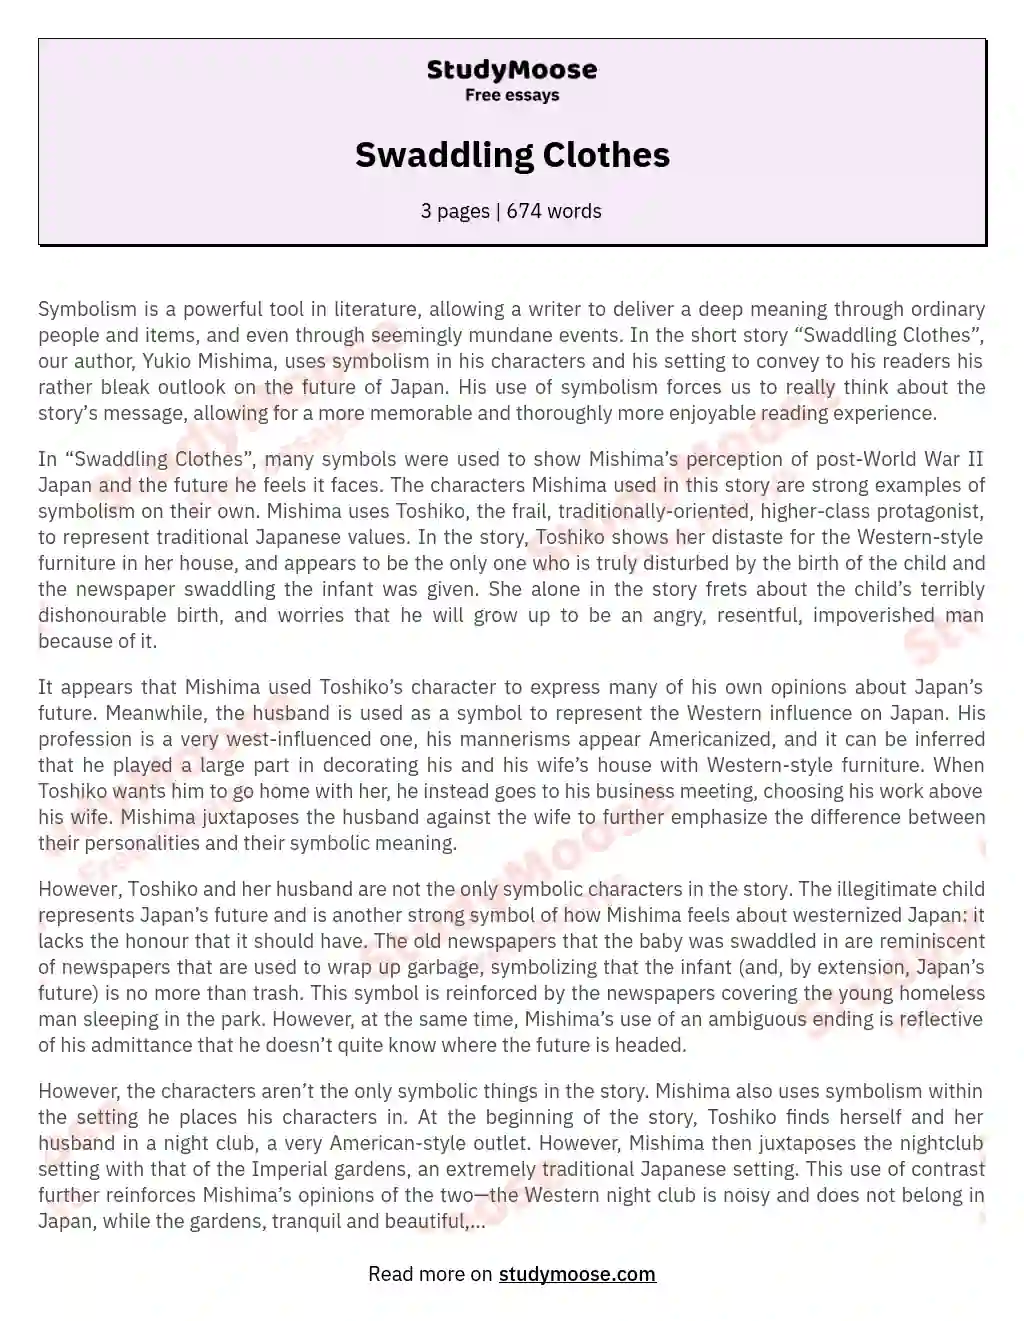 Swaddling Clothes essay